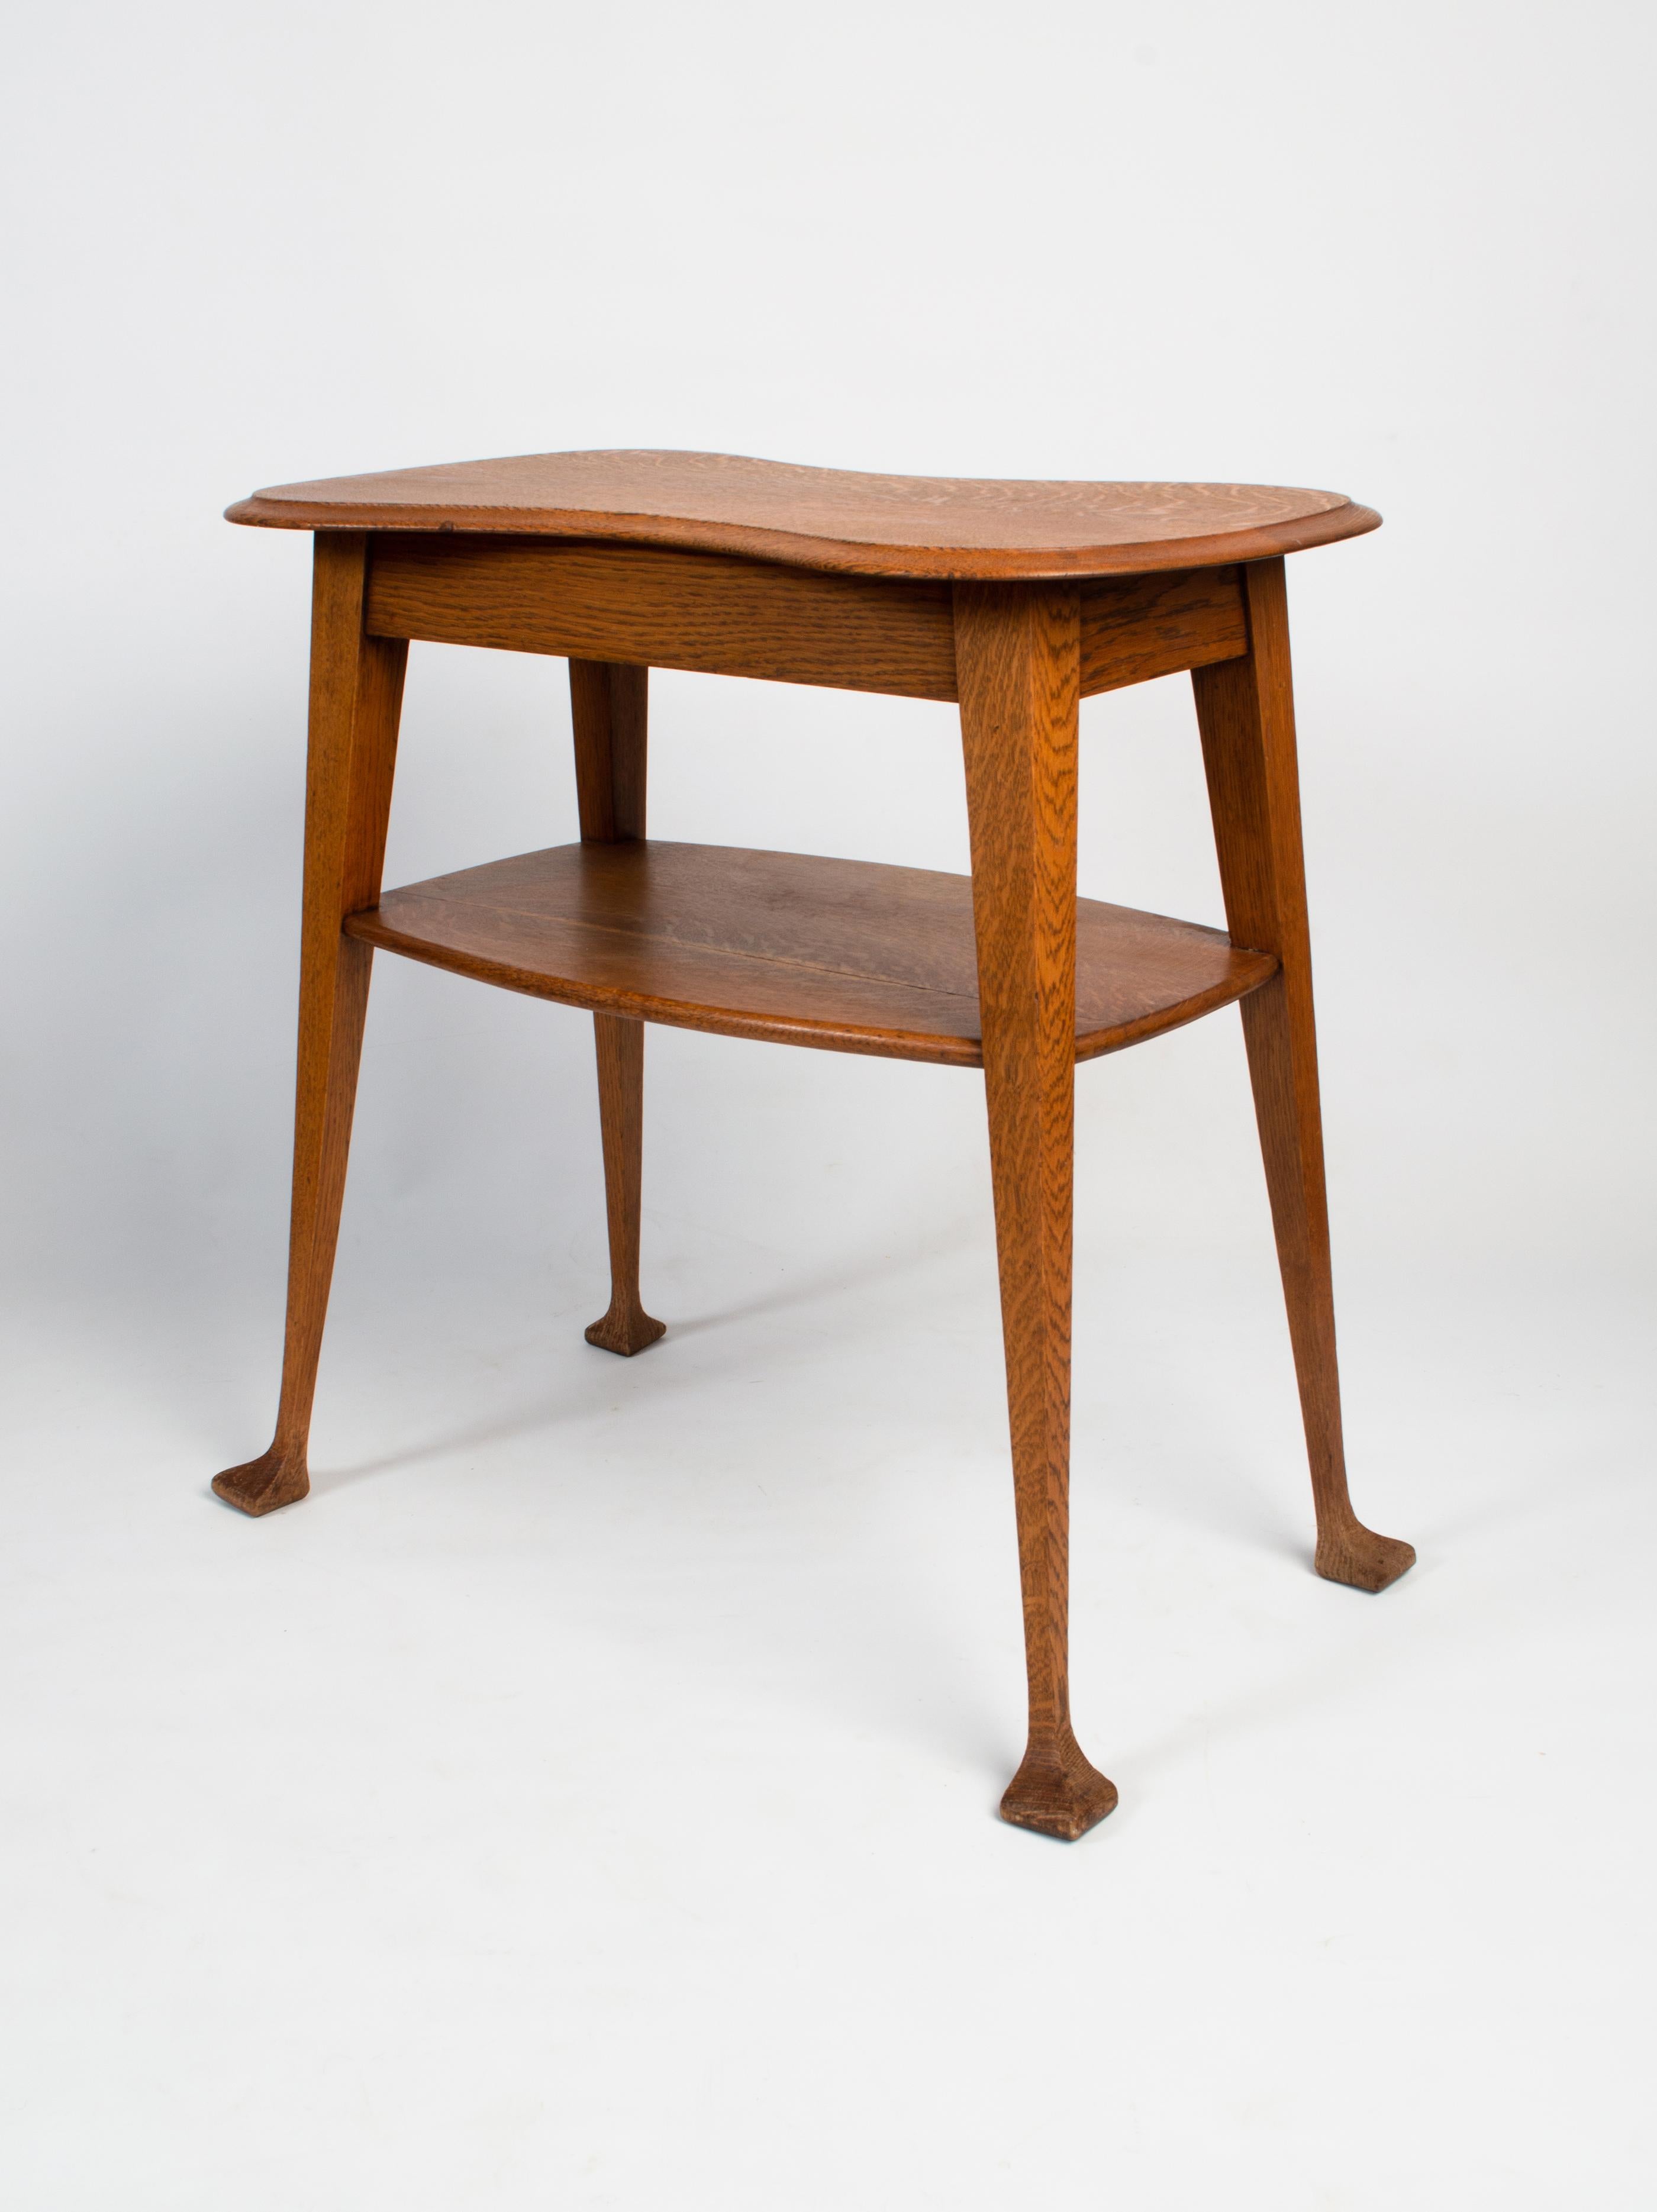 Antique English Shapland & Petter Arts & Crafts Golden Oak Side Table C.1890 For Sale 4